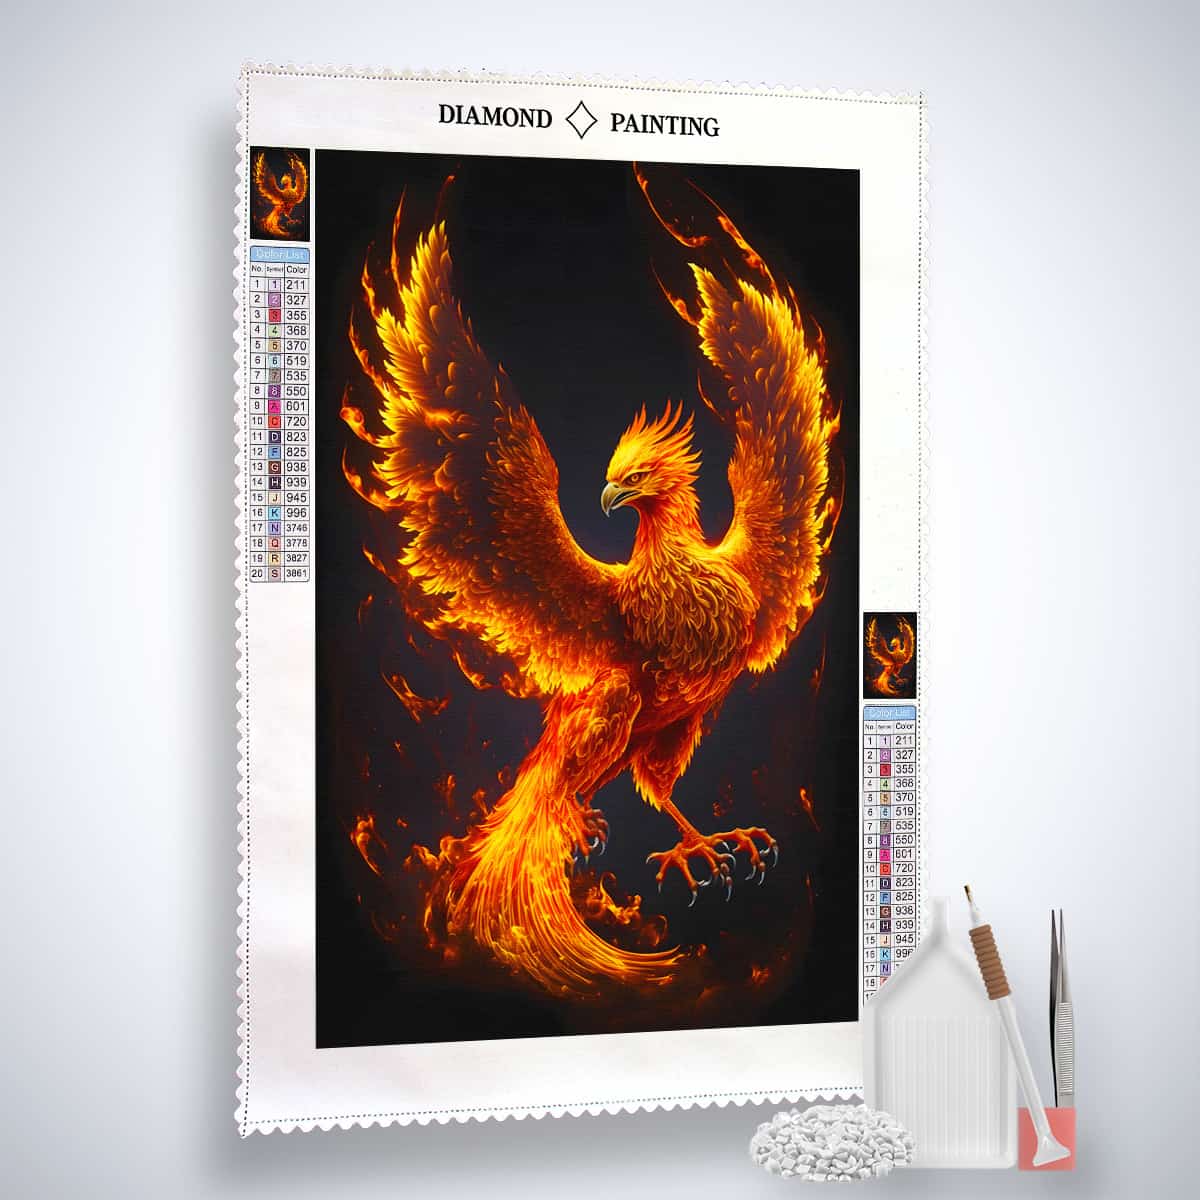 Diamond Painting - Feuer Phoenix - gedruckt in Ultra-HD - Fantasy, Neu eingetroffen, Phönix, Vertikal